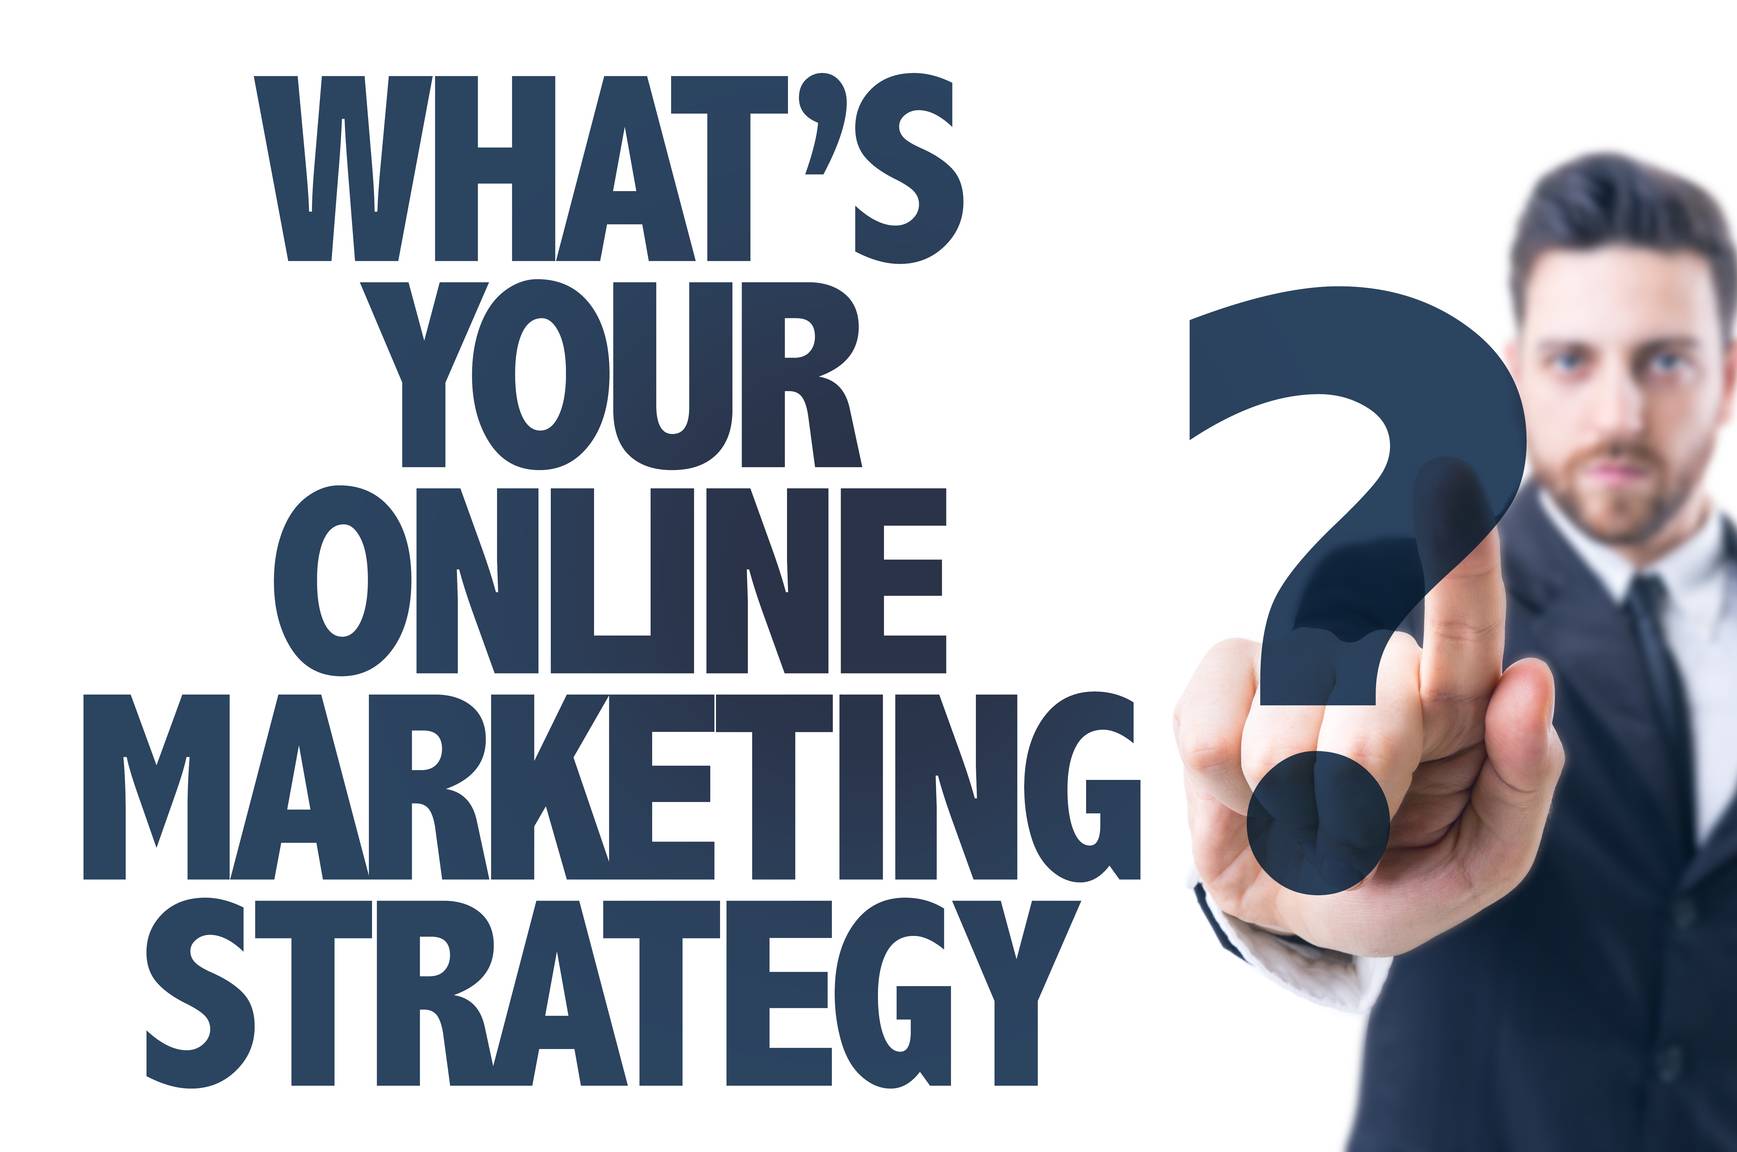 Online Marketing McKinney TX: 3 Low-Cost Ways To Market Your Business